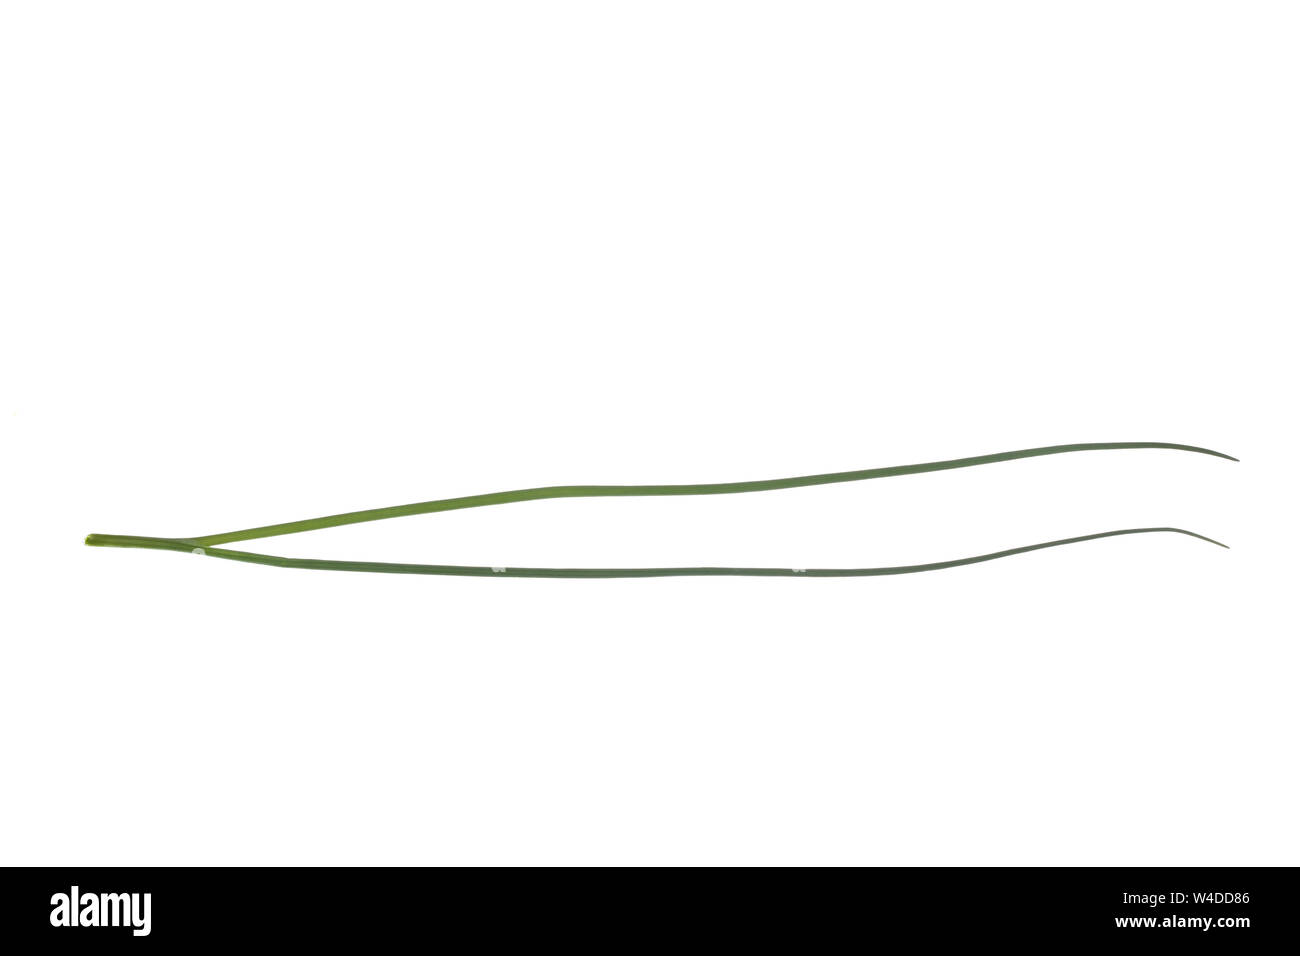 Schnittlauch, Schnitt-Lauch, Allium schoenoprasum, ciboulette, la ciboulette, la civette. Blatt, Blätter, feuille, feuilles Banque D'Images